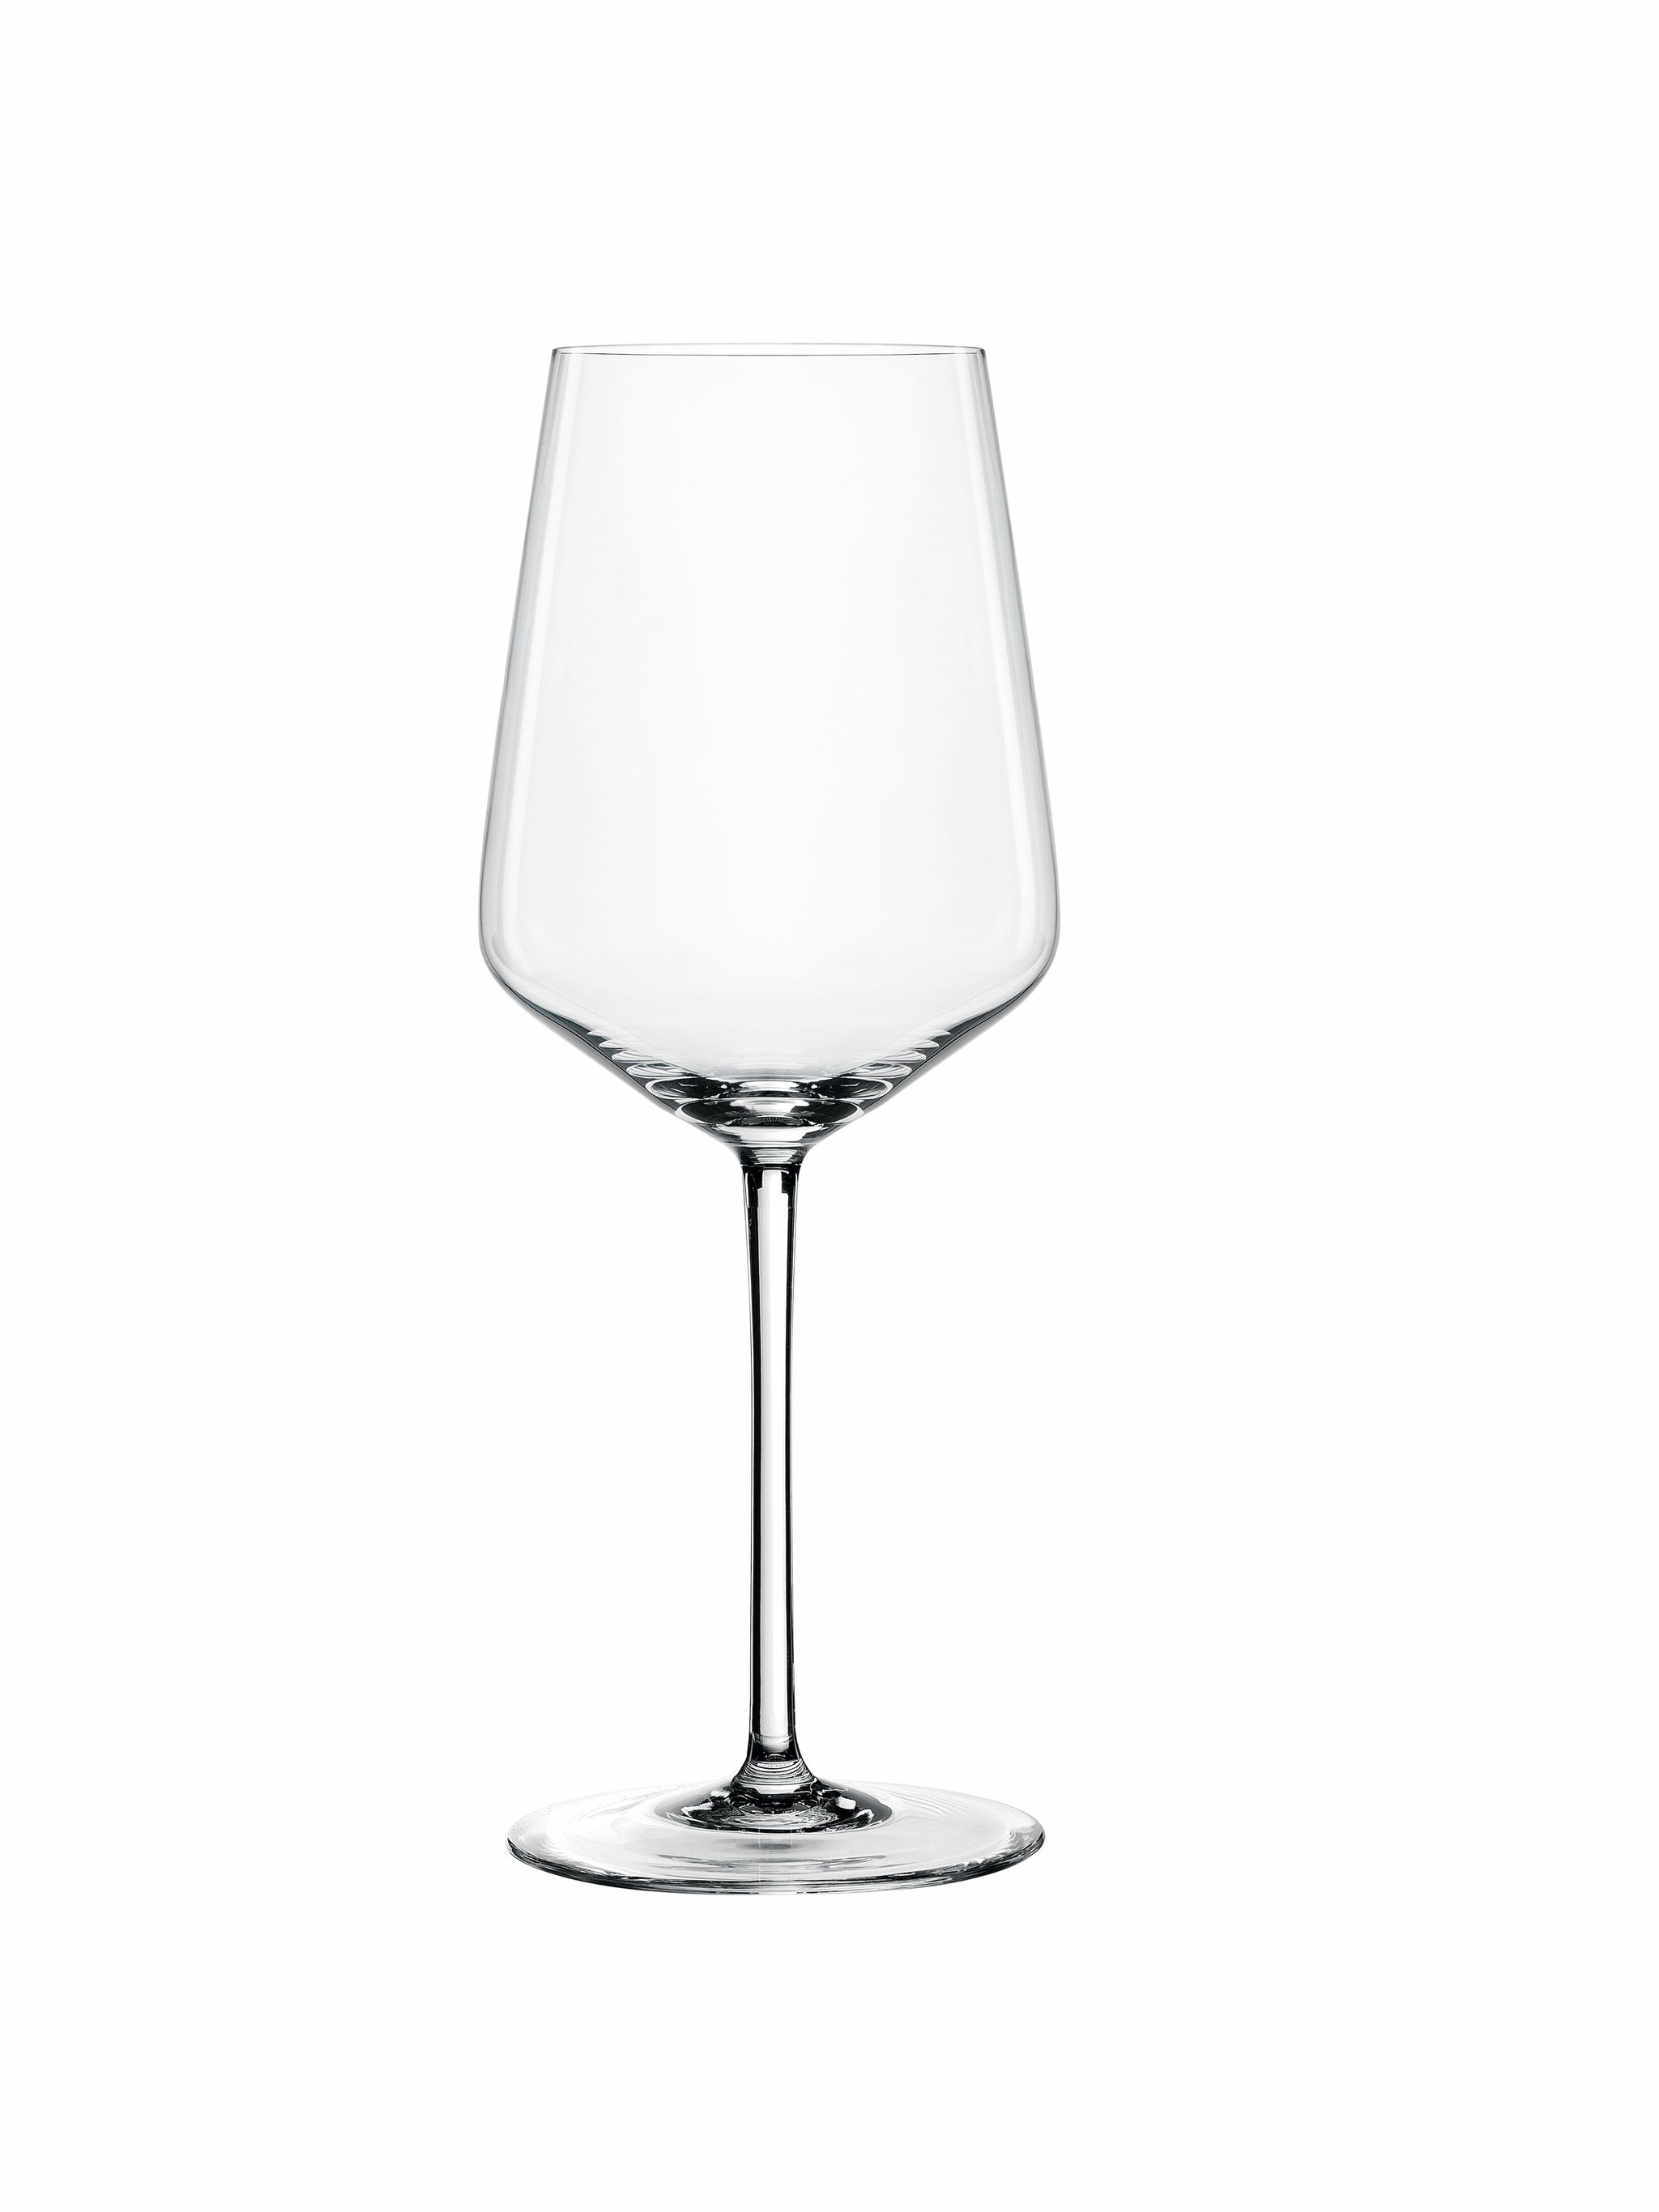 Spiegelau Style White Wine Glasses, Set of 4